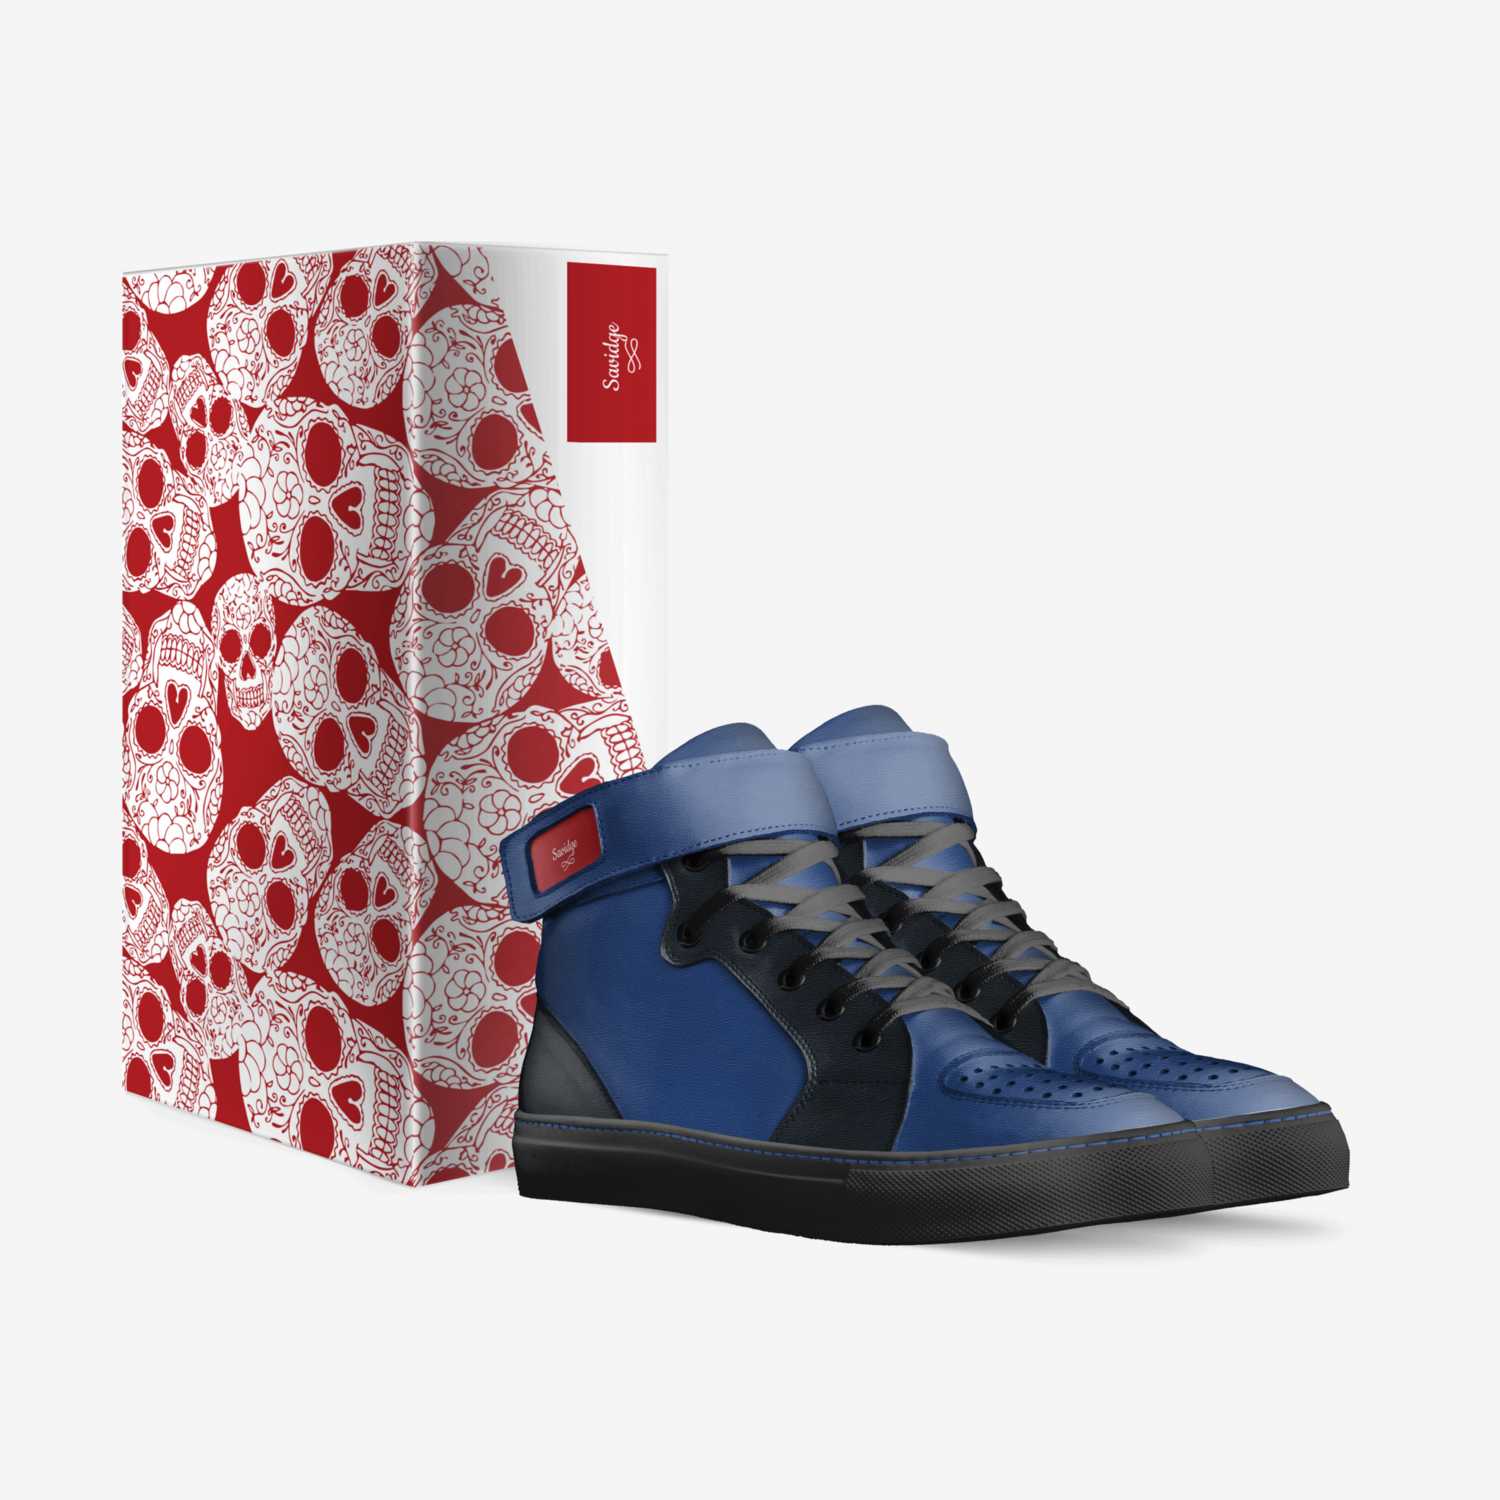 Savidge  custom made in Italy shoes by Sebastian Kegebein | Box view